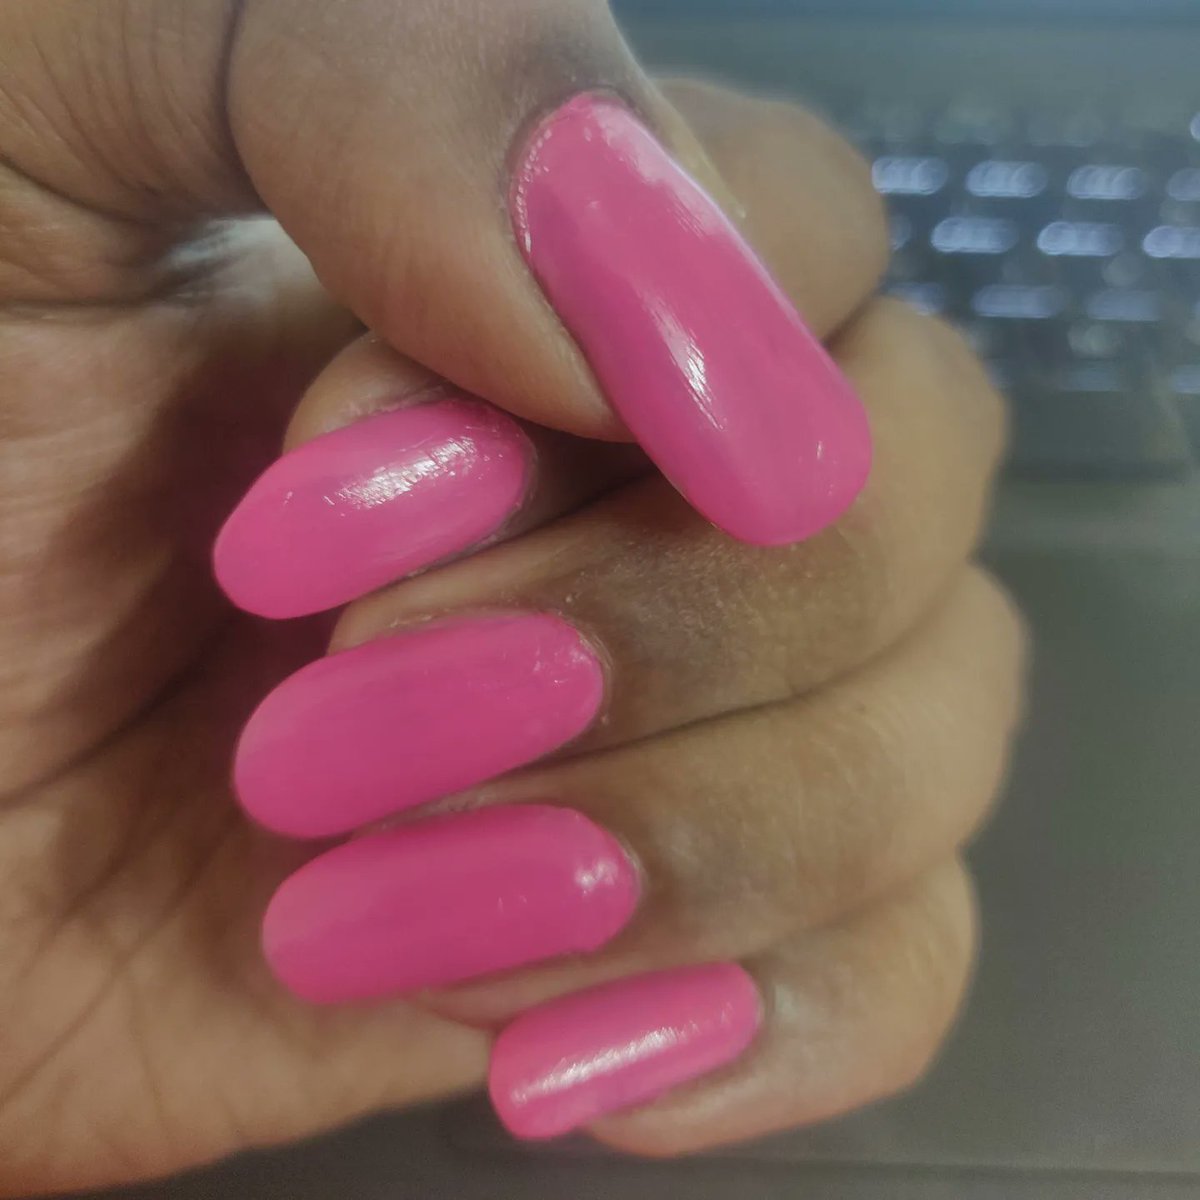 Also my #fingernails 💋